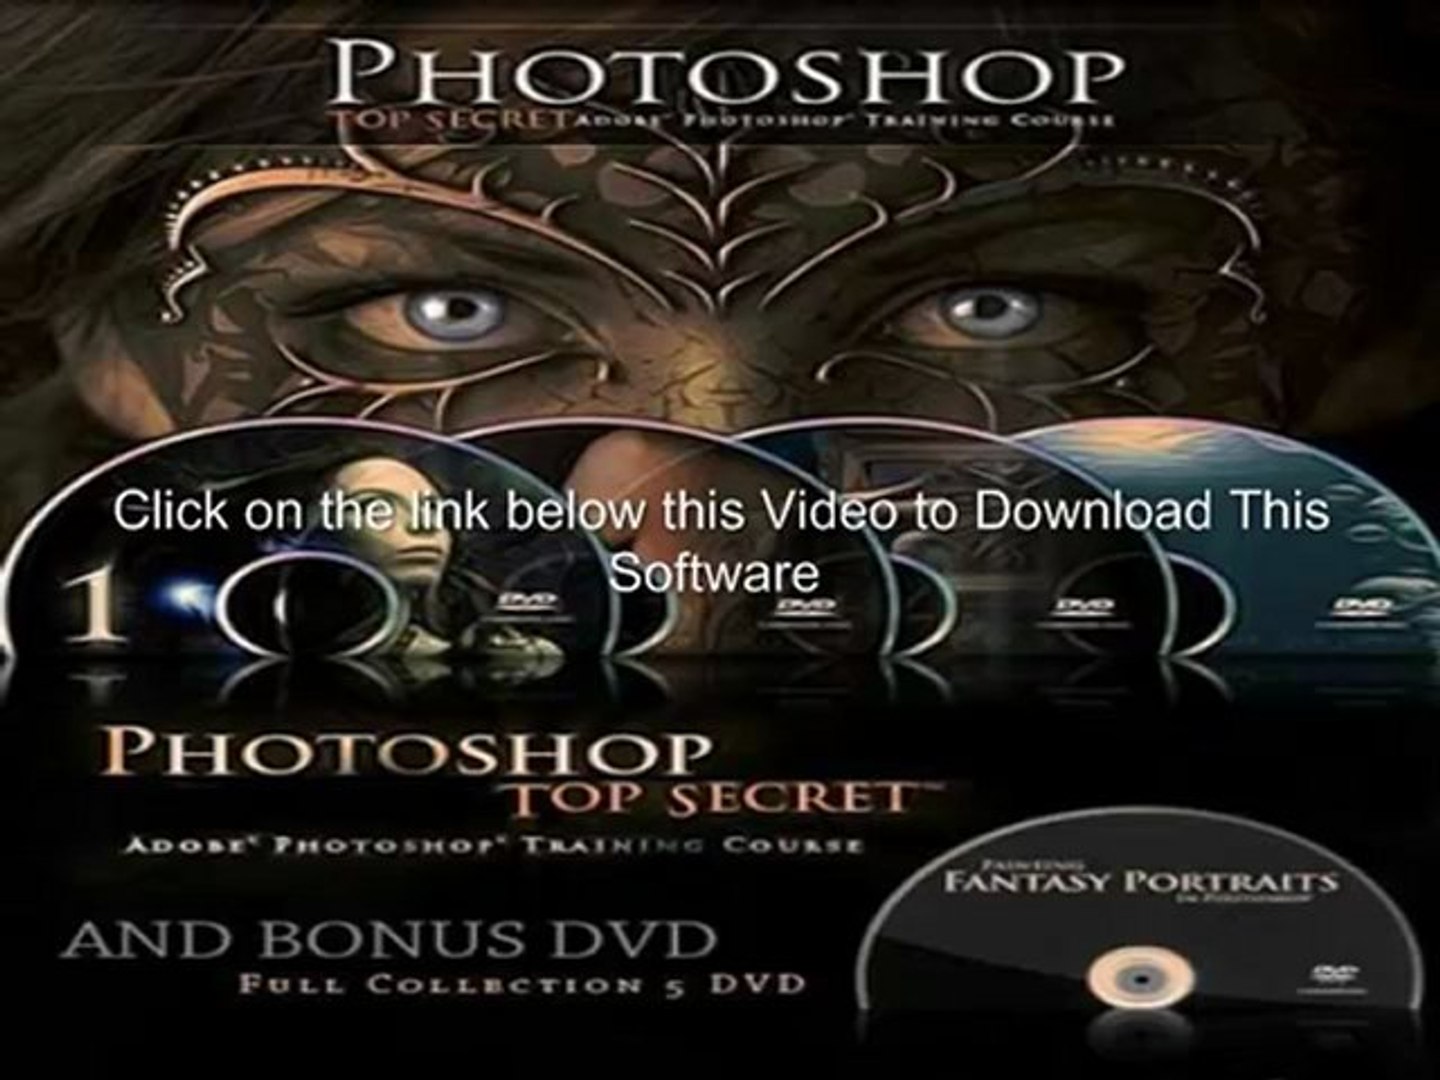 Photoshop Top Secrets Full Collection 4 Bonus - Dailymotion